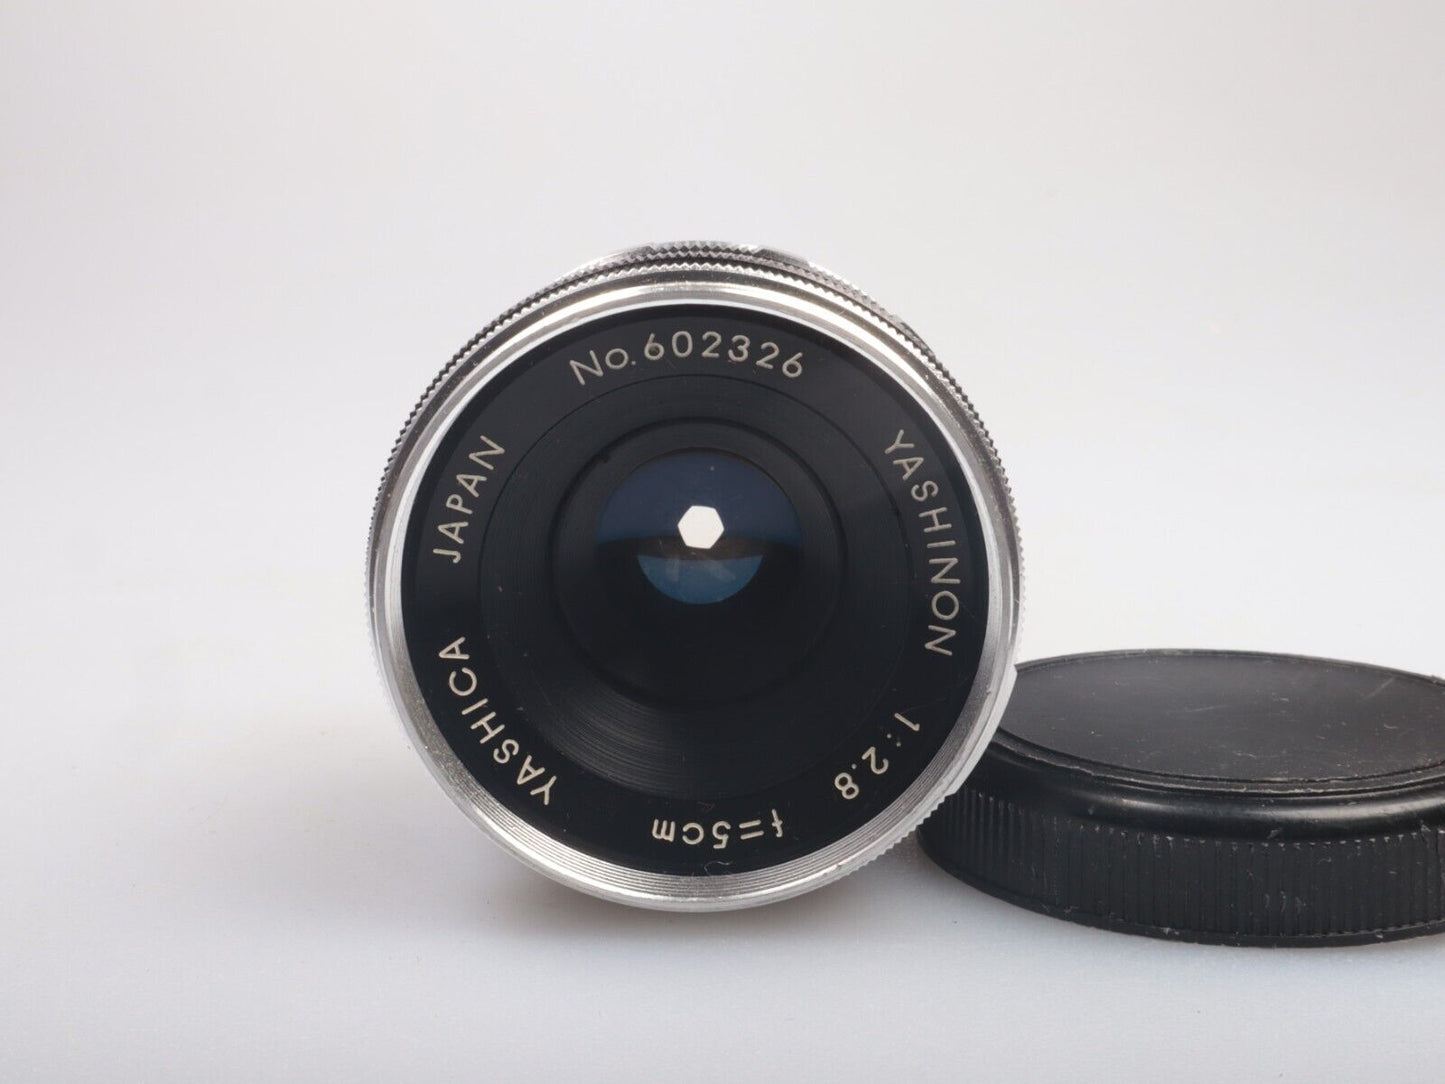 Yashica YASHINON | 1:2.8 5cm lens | Nikon mount